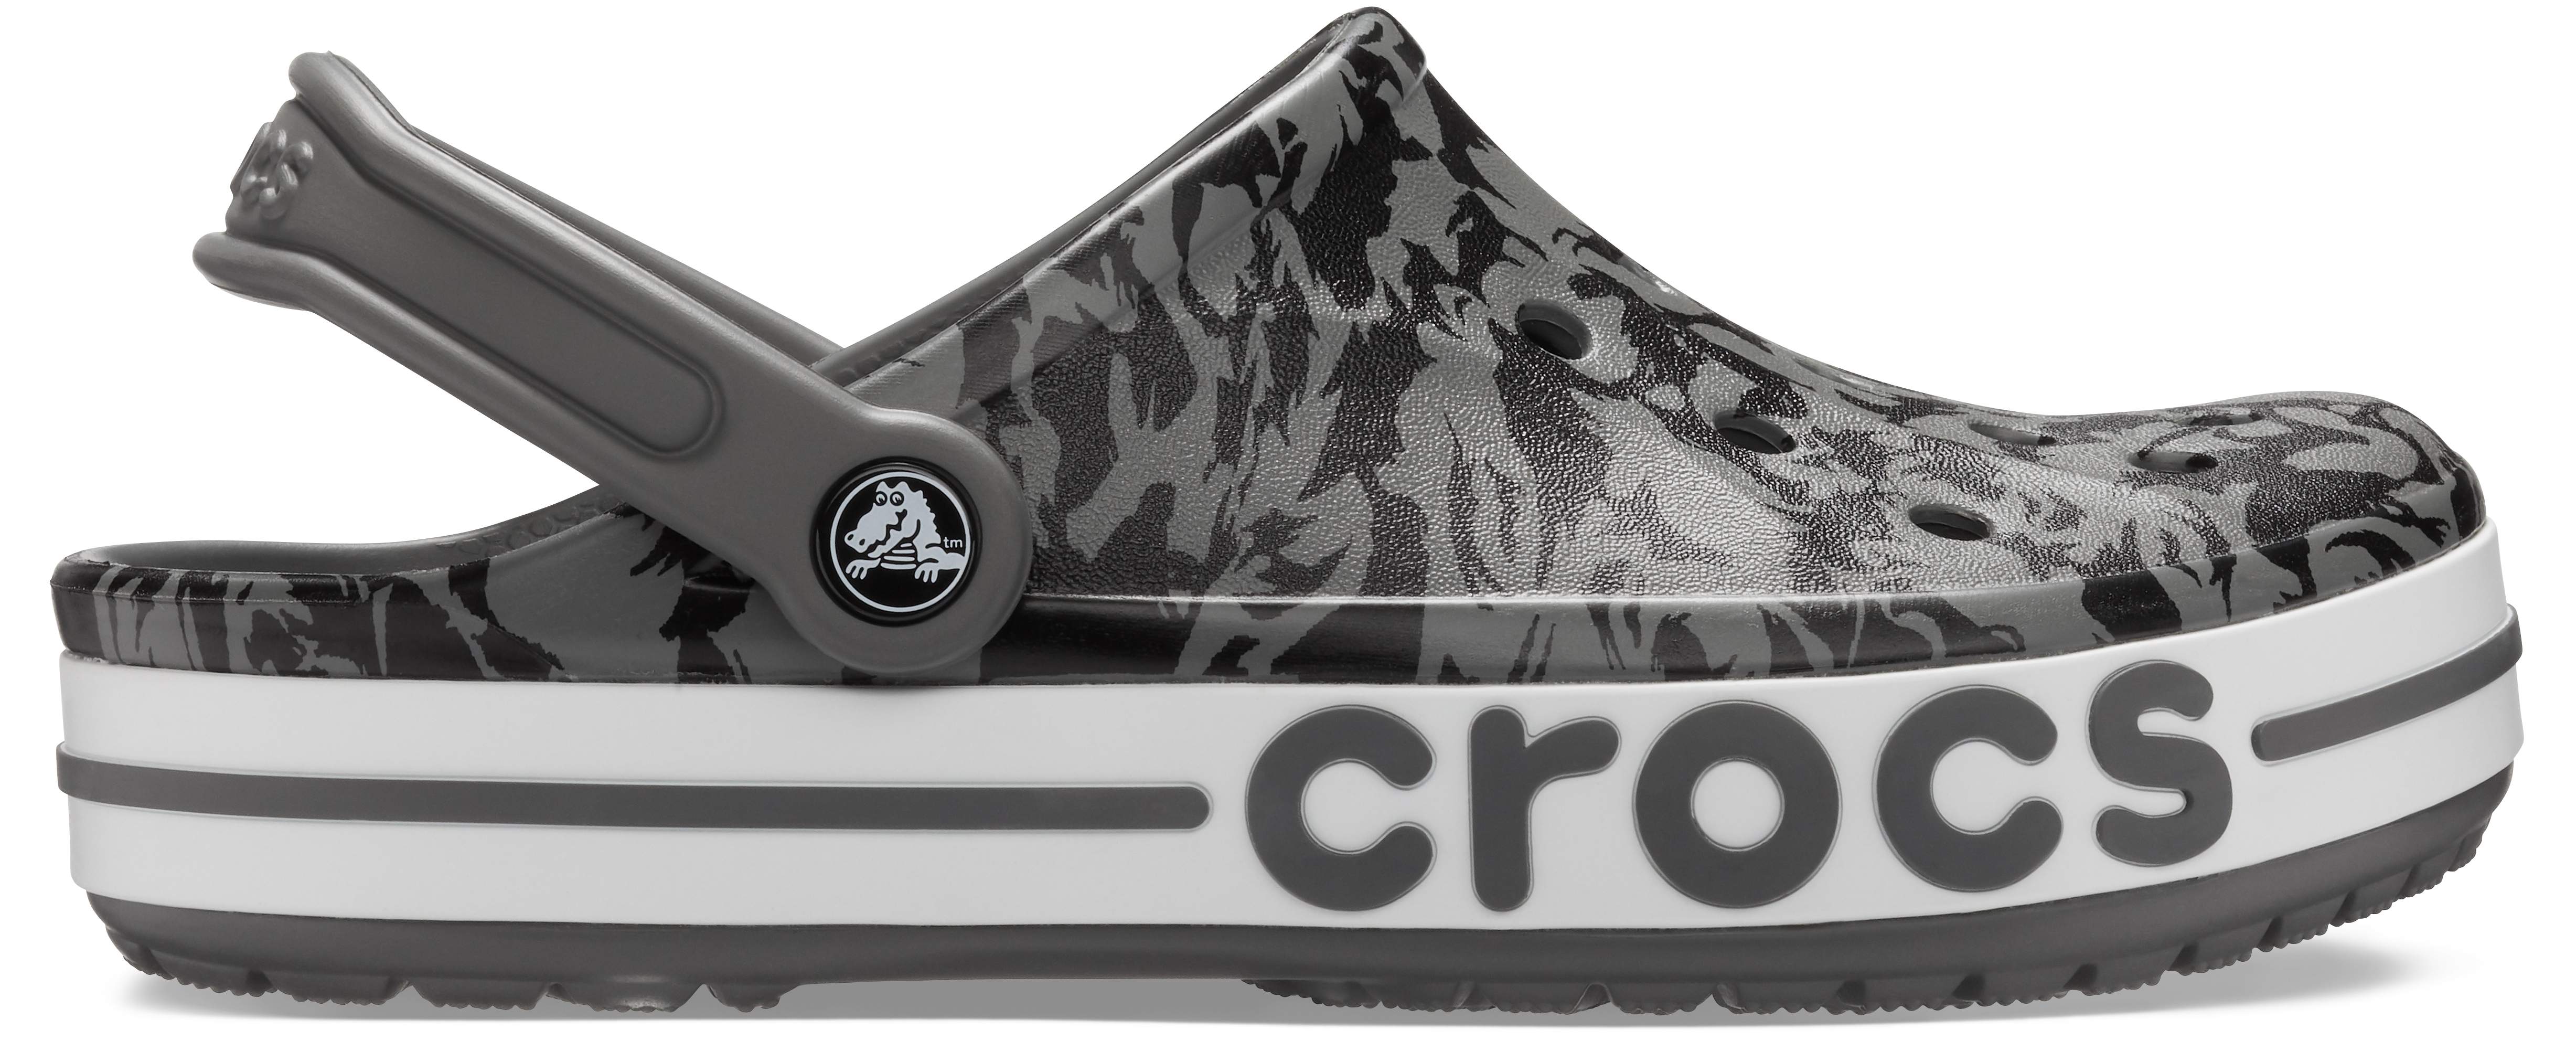 crocs printed clogs